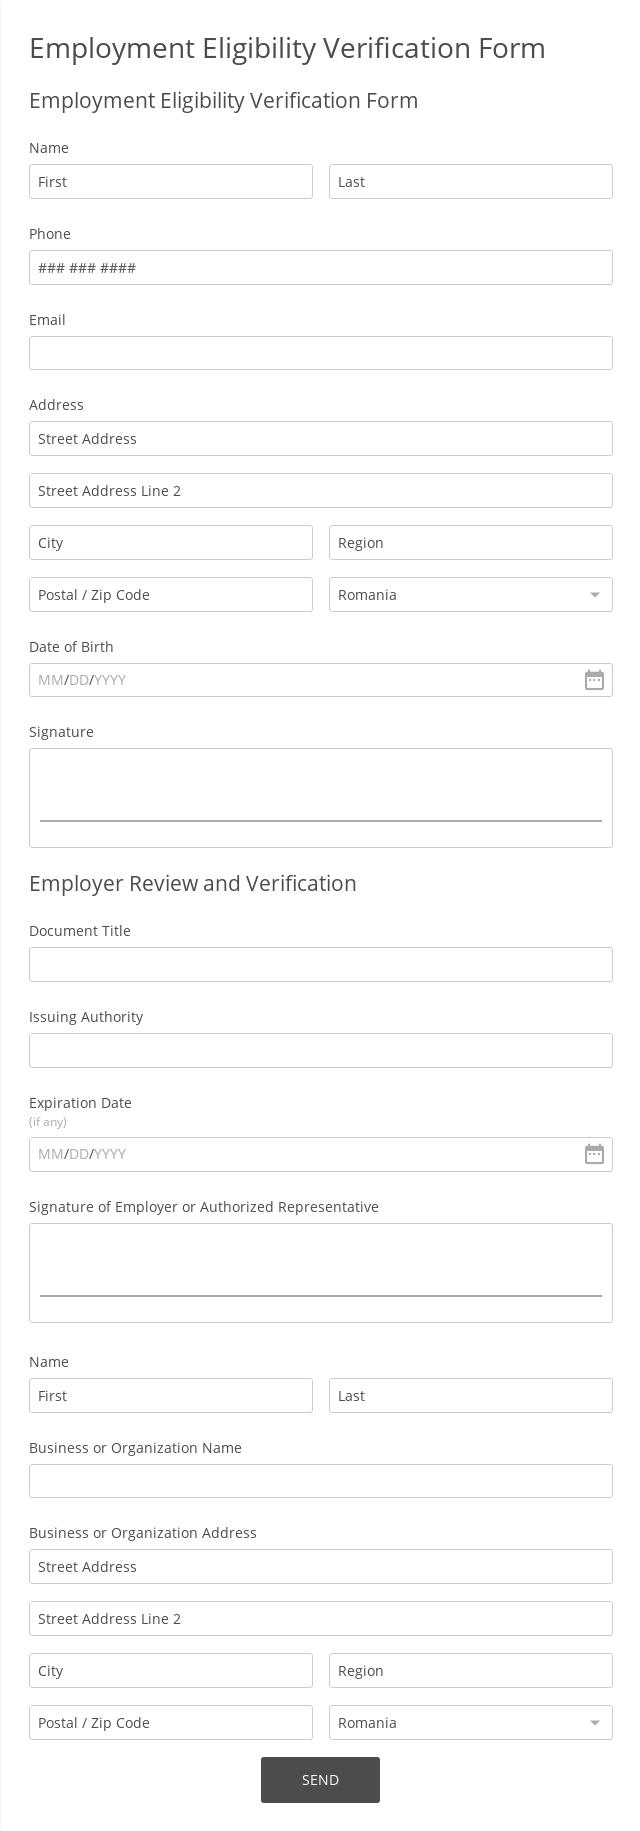 Employment Eligibility Verification Form